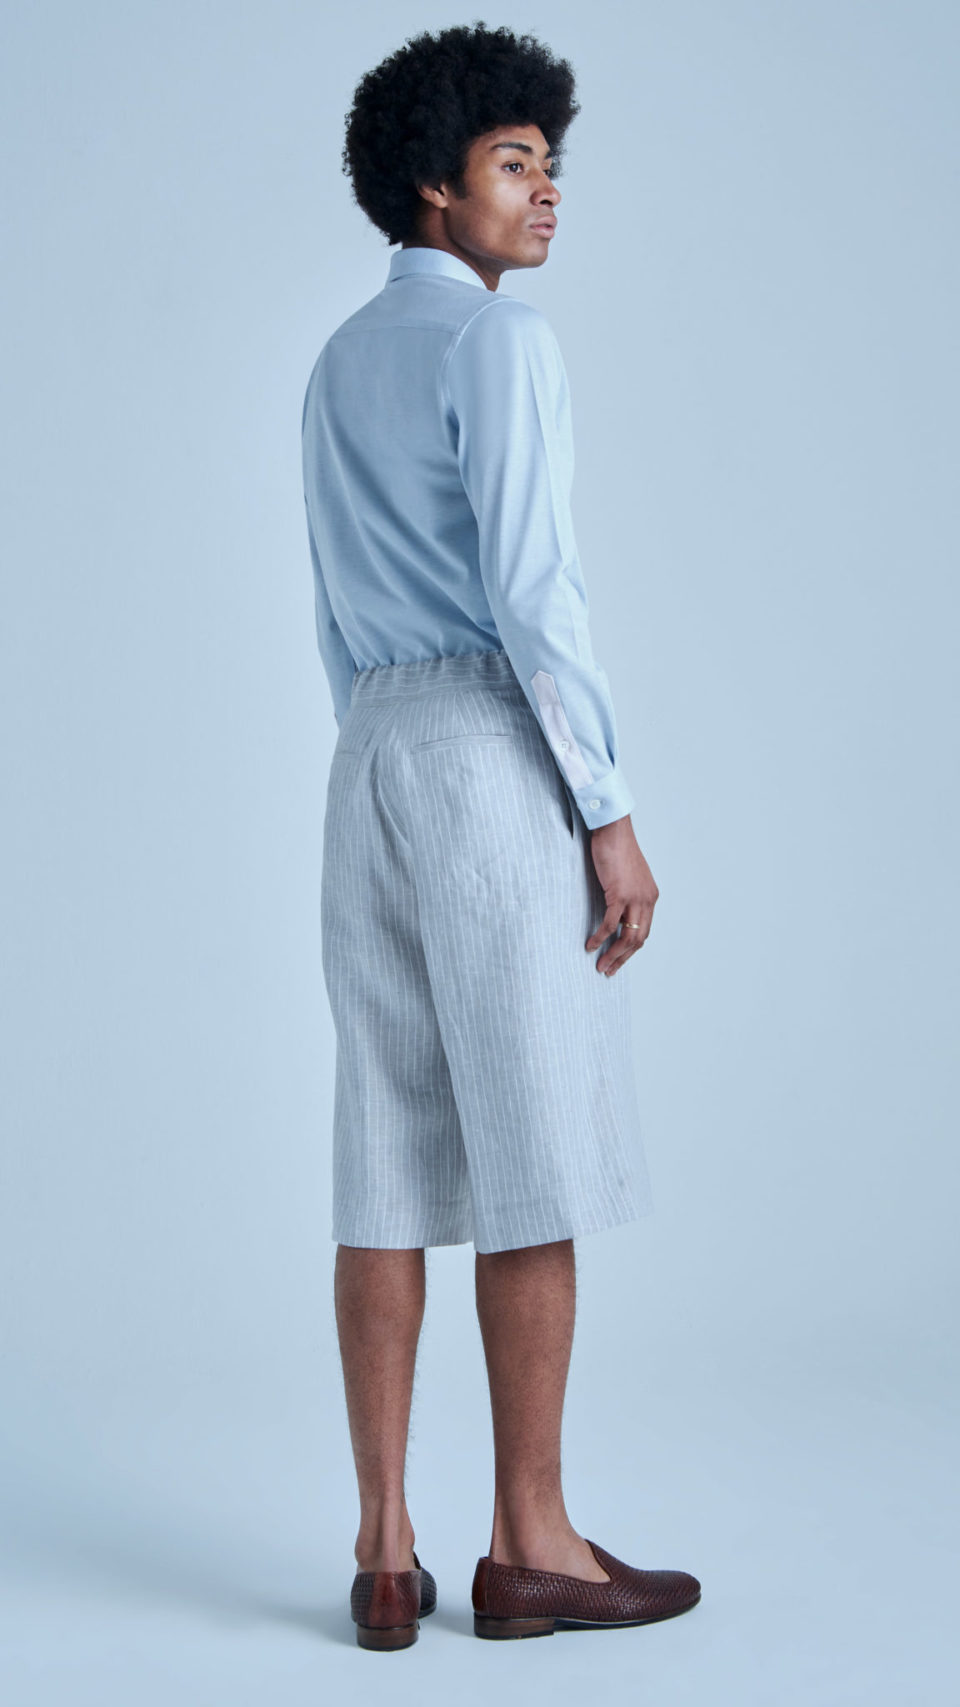 Tailored Linen Short in light grey - MAR by Maria Karimi